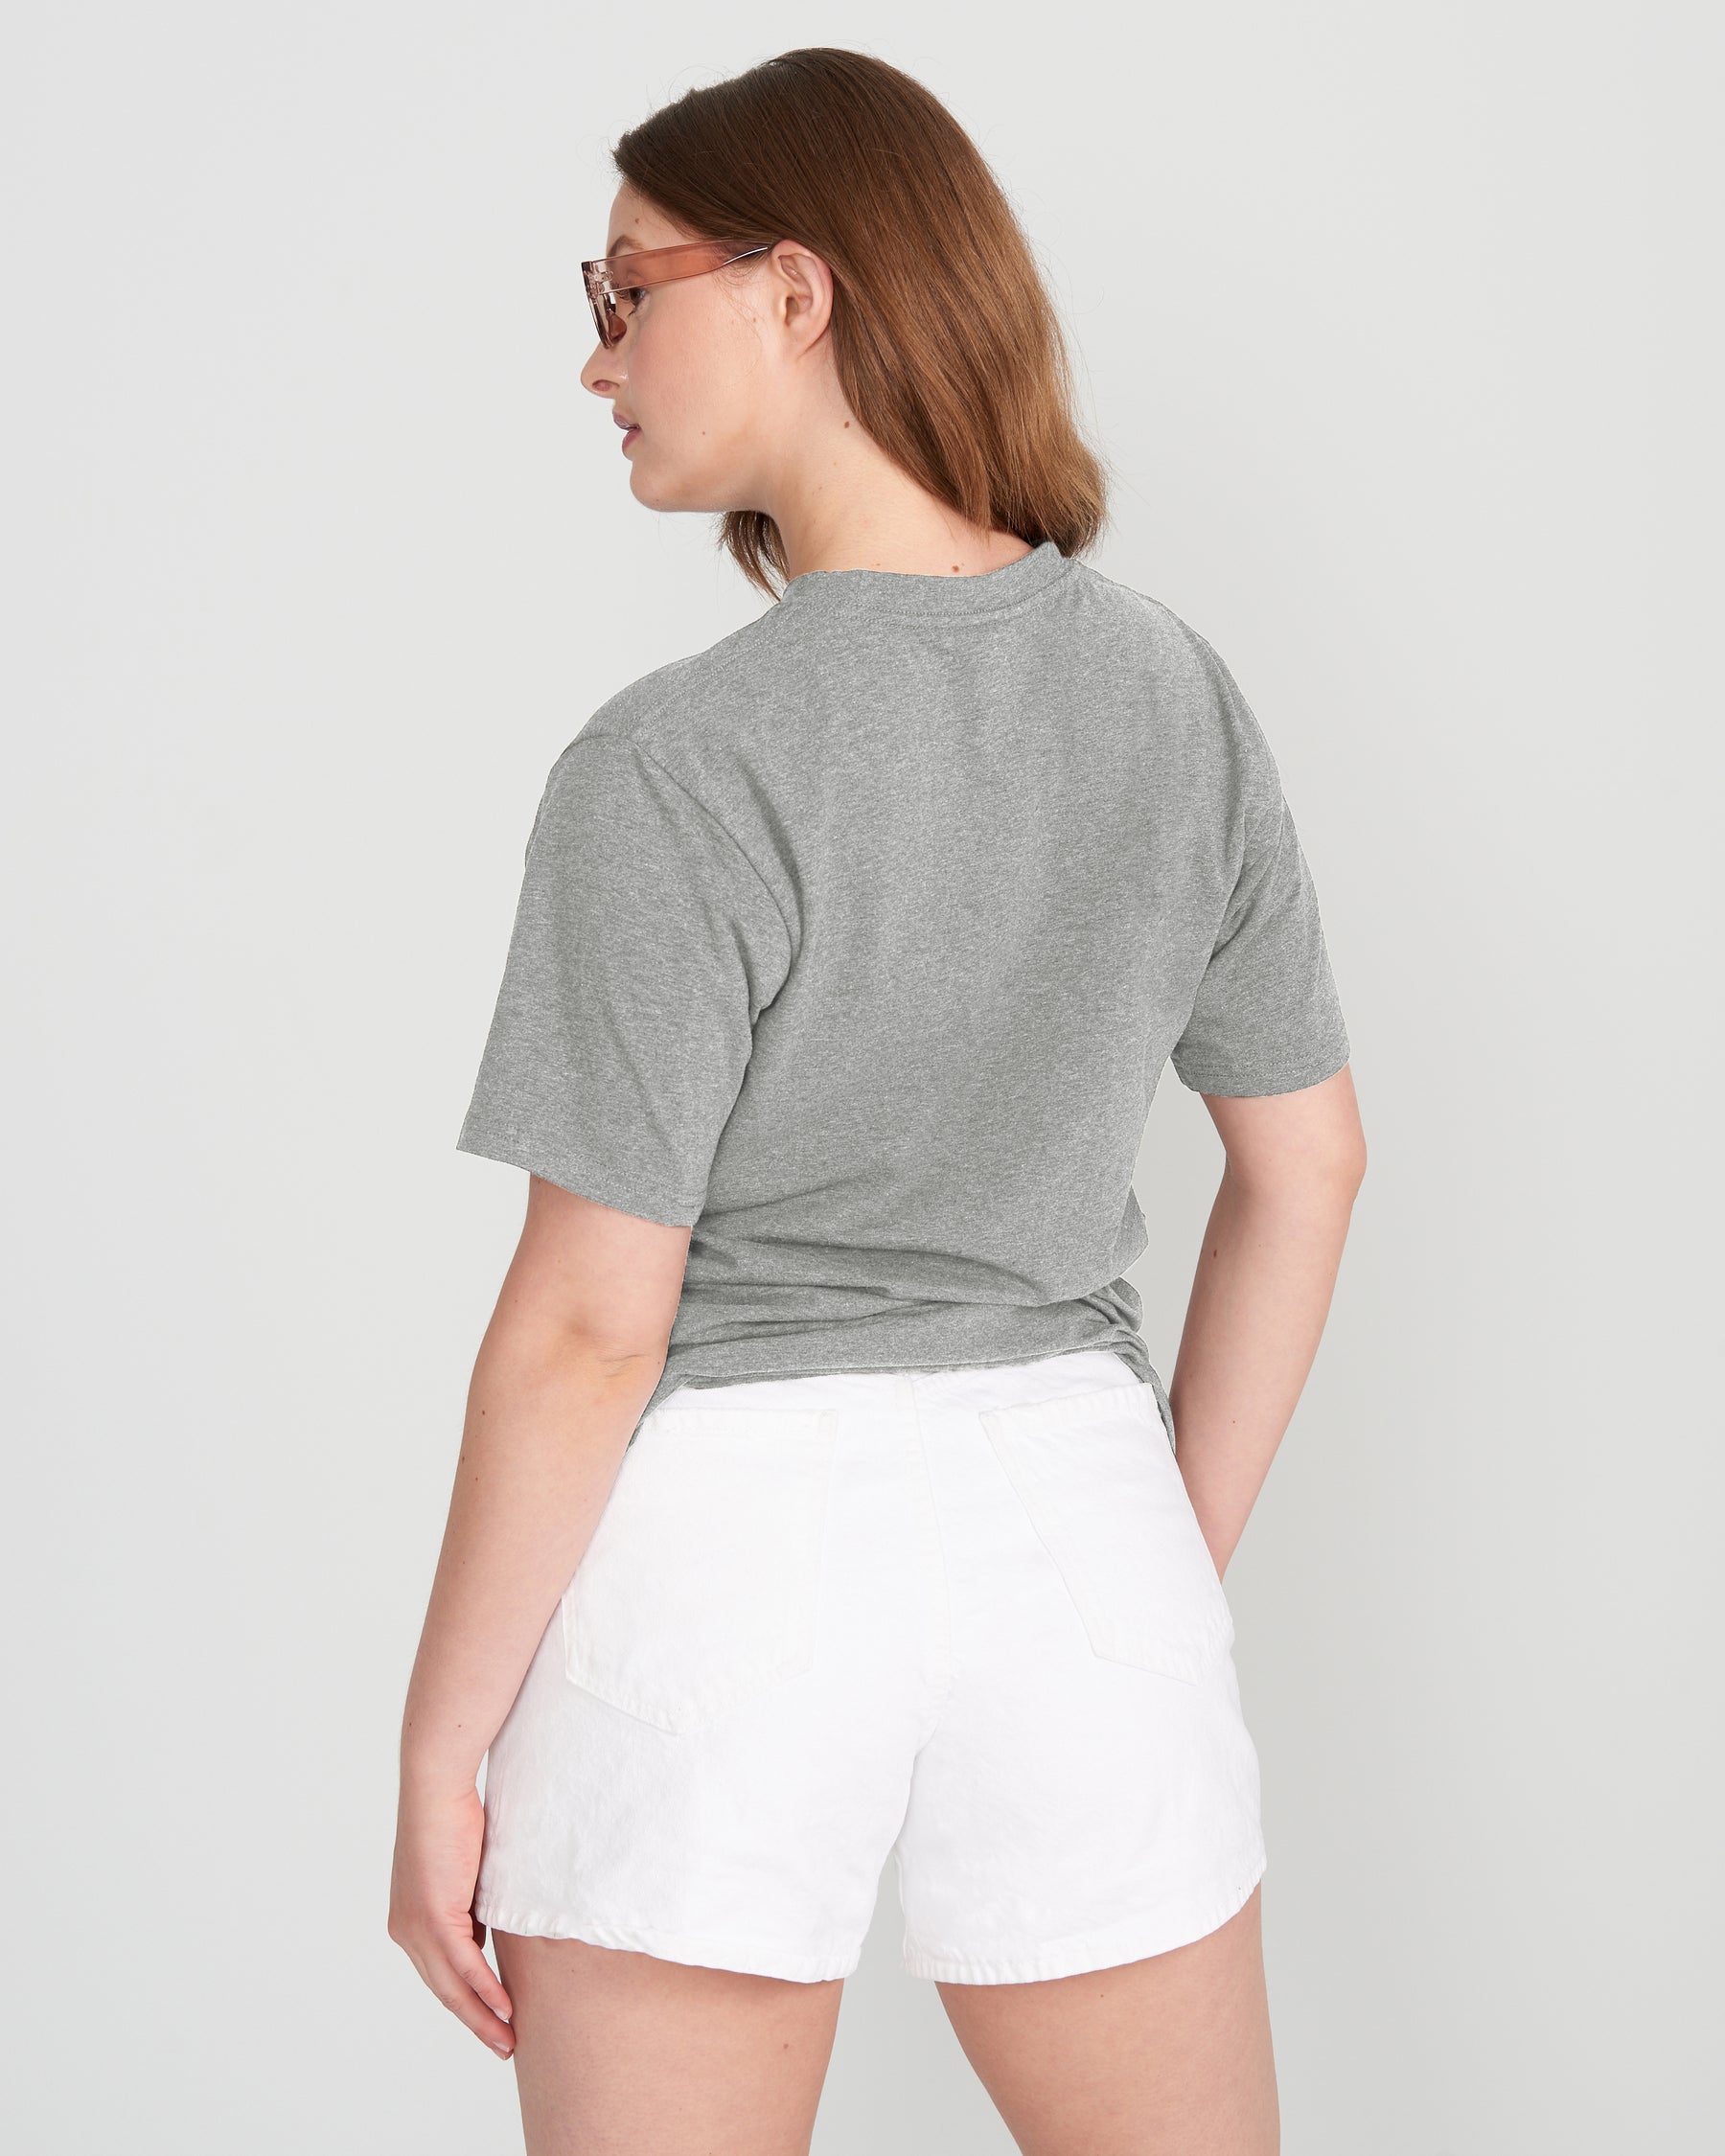 Grey - Women's Sweat Proof Shirt (Crewneck)